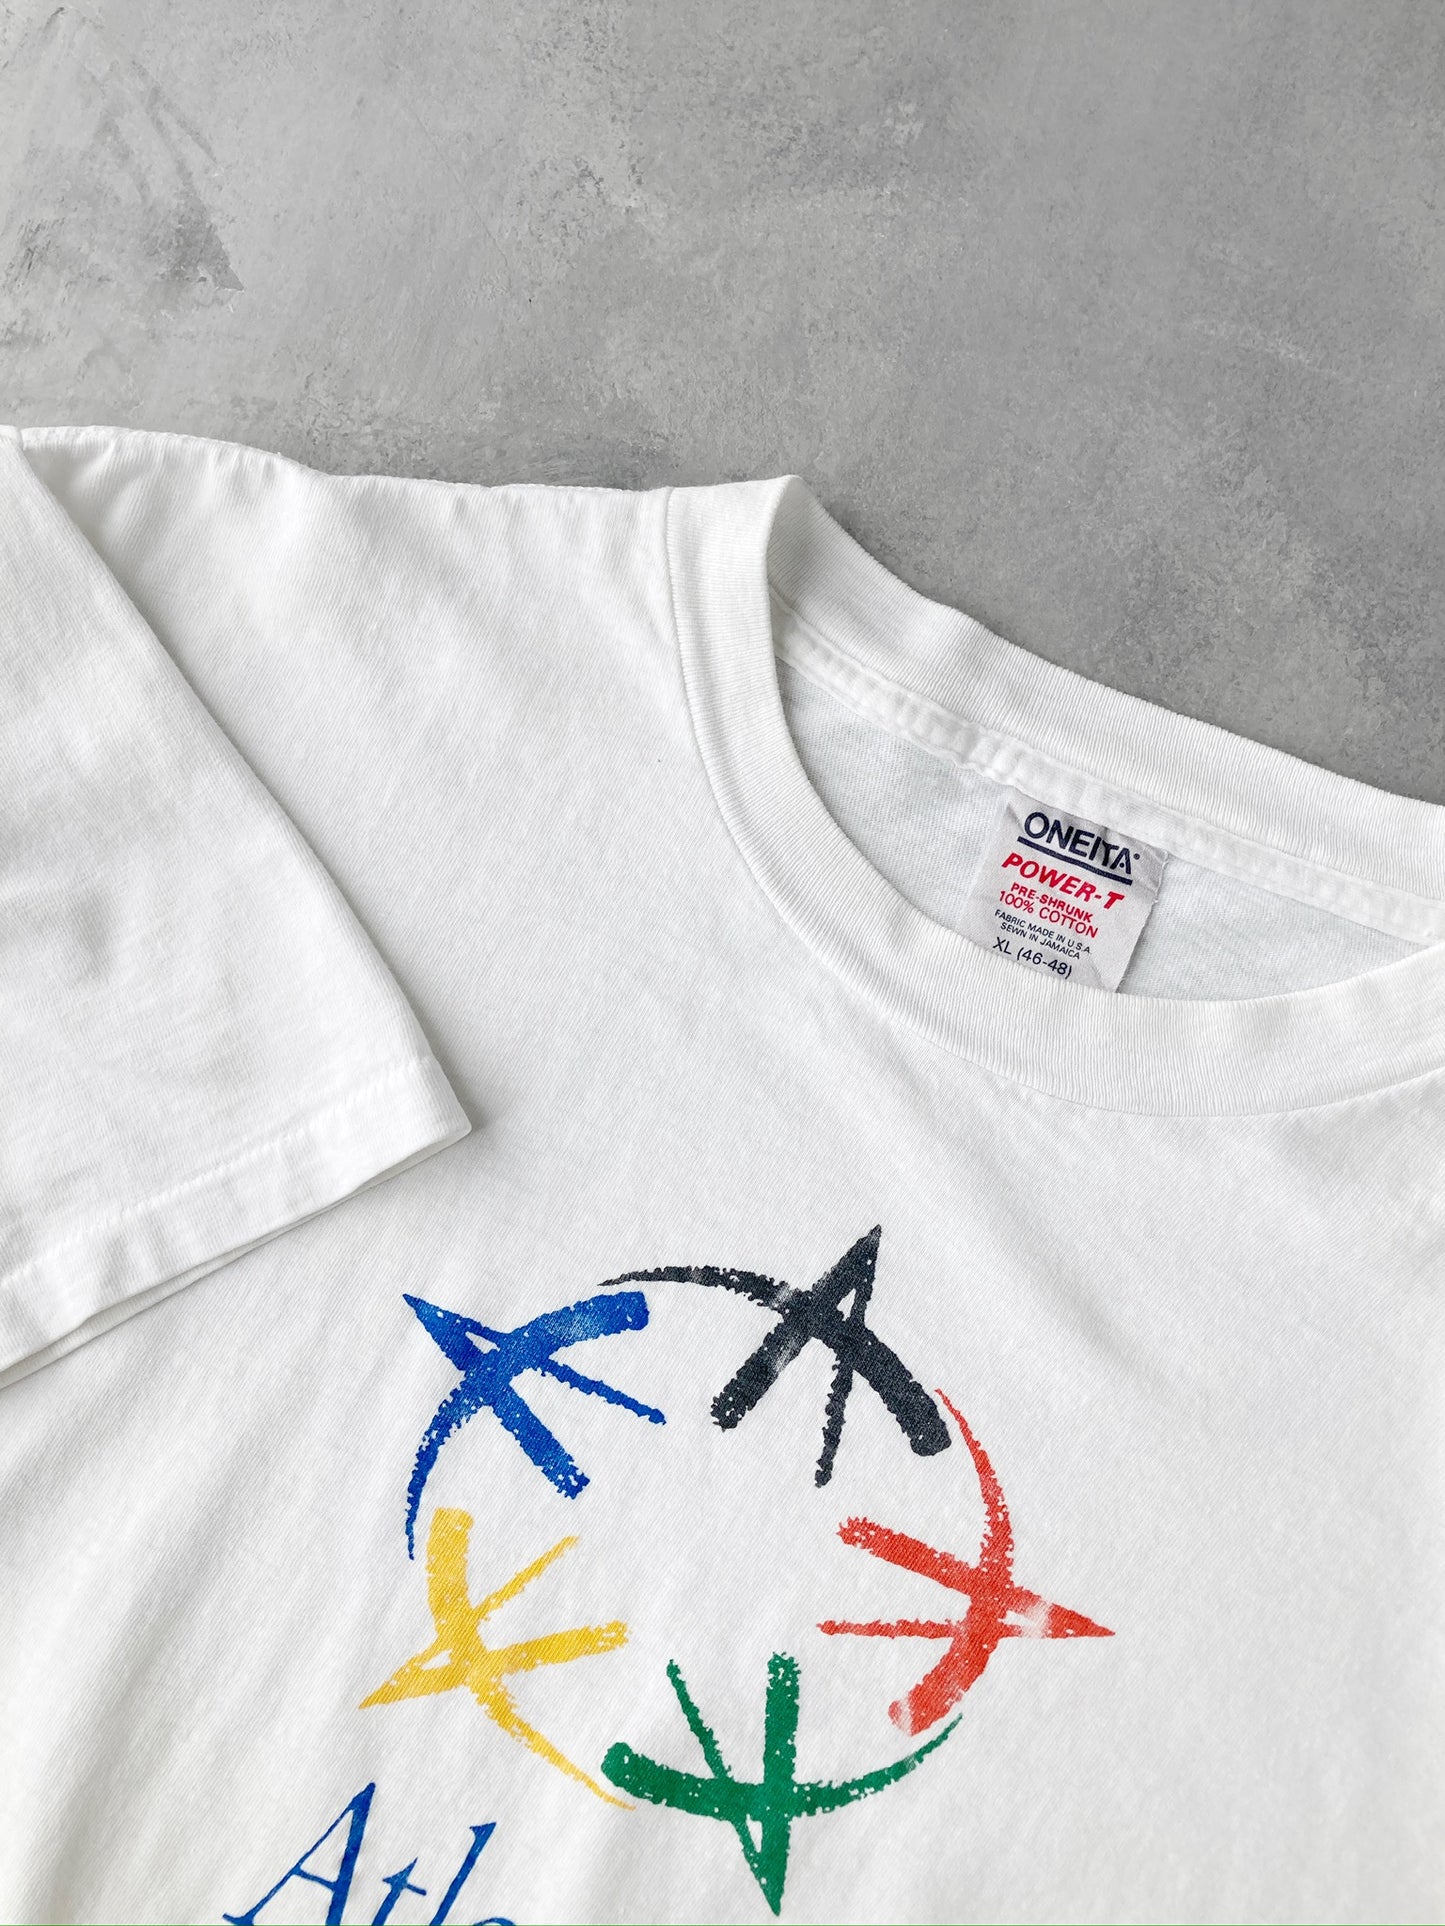 Atlanta Olympics T-Shirt '96 - Large / XL